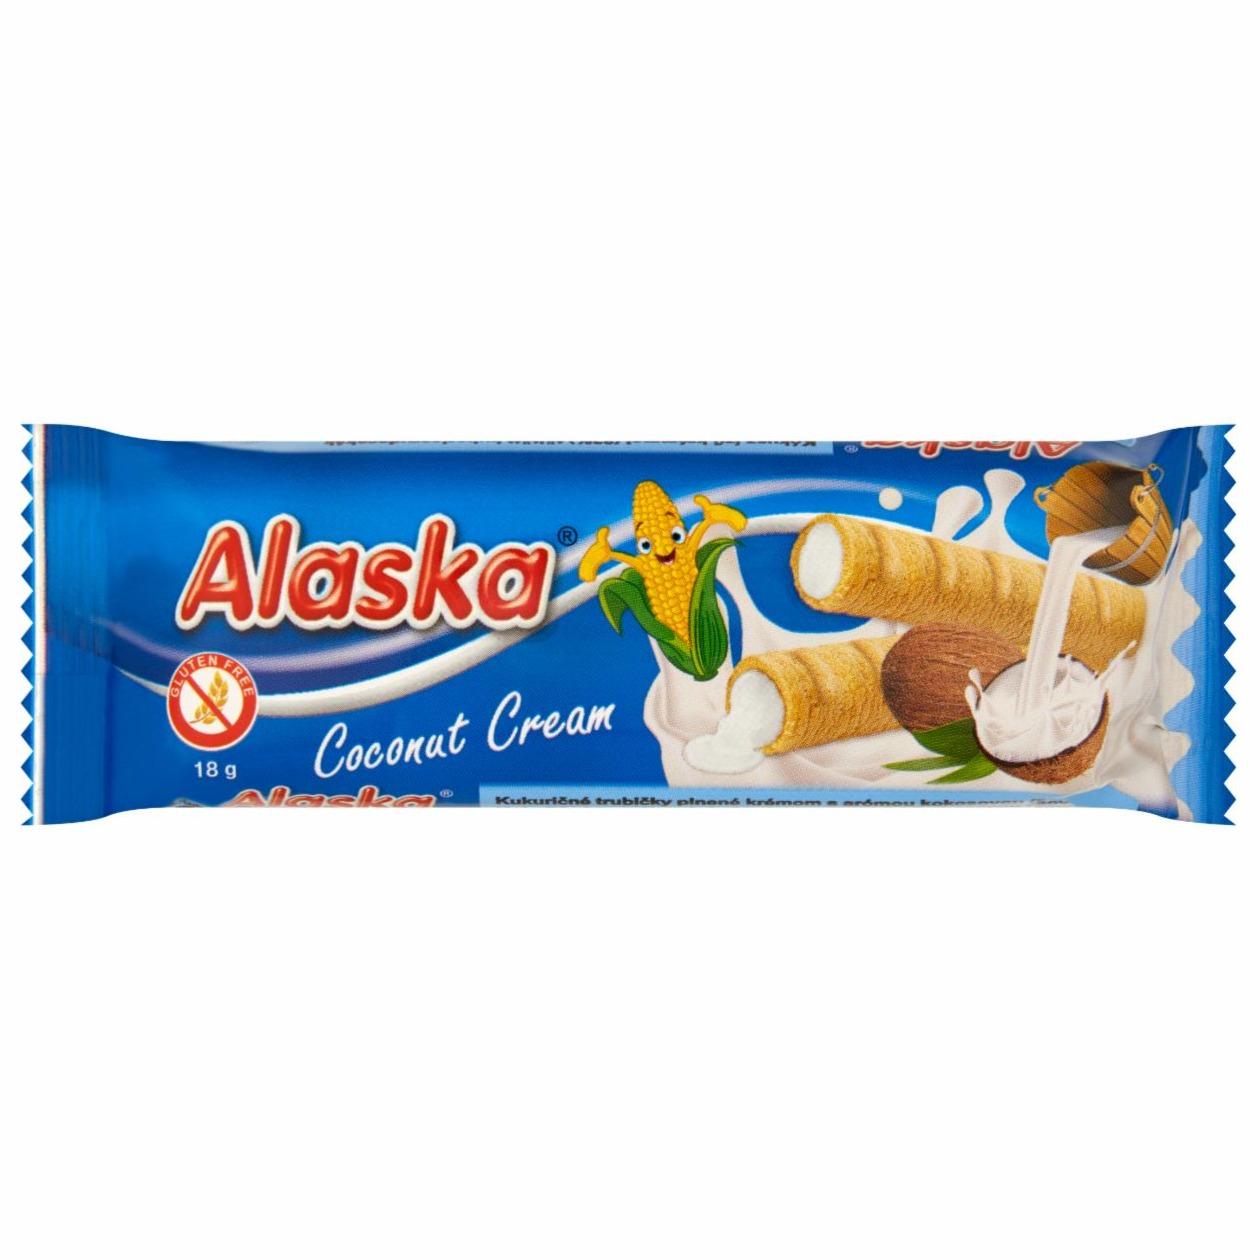 Fotografie - Alaska coconut cream